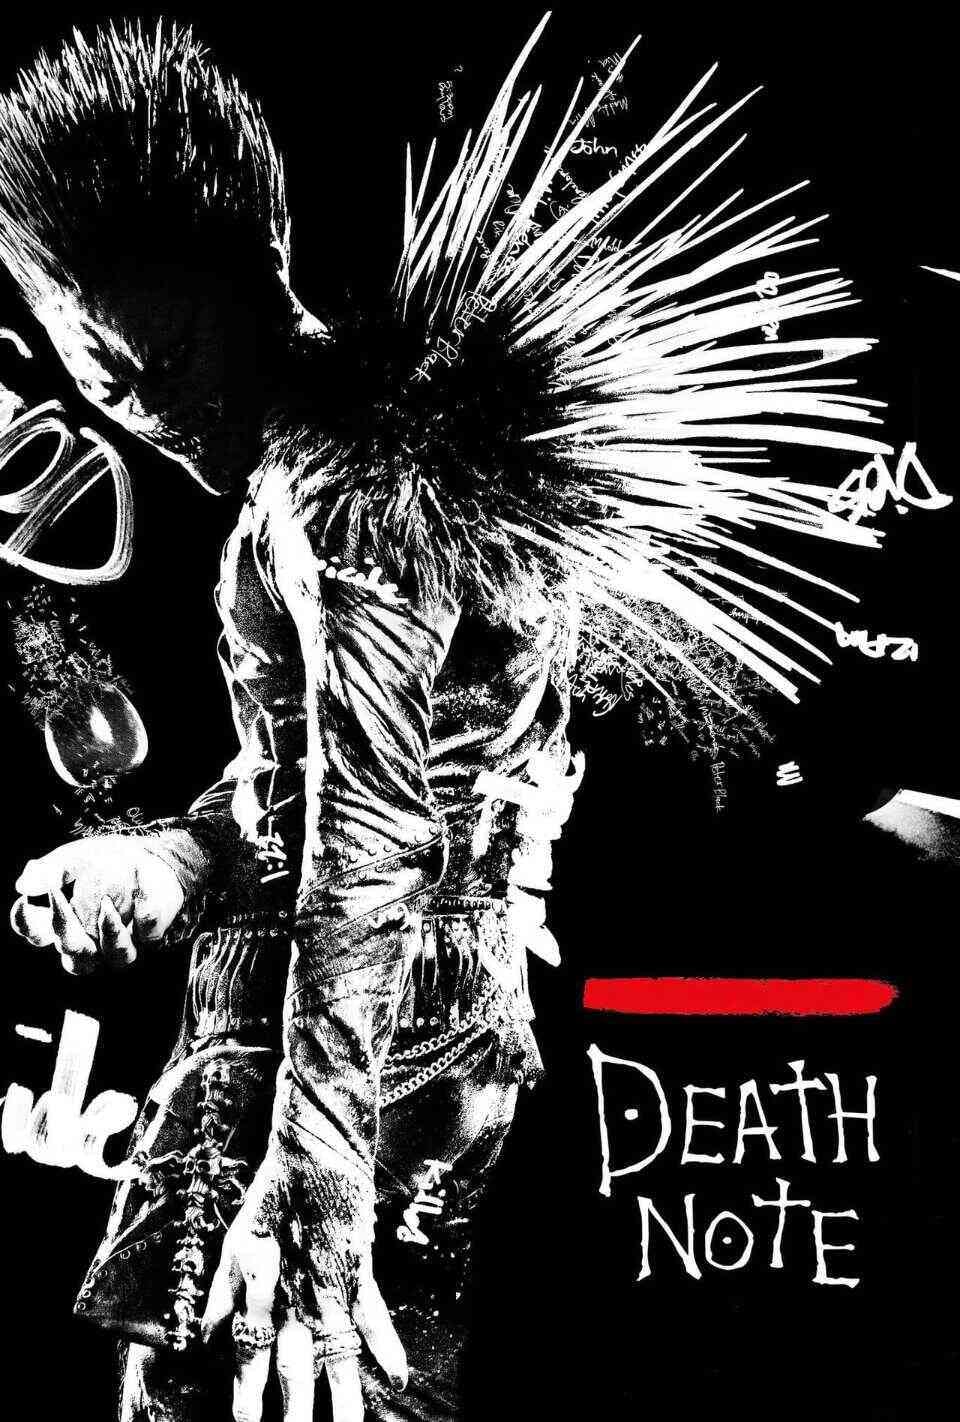 Read Death Note screenplay.